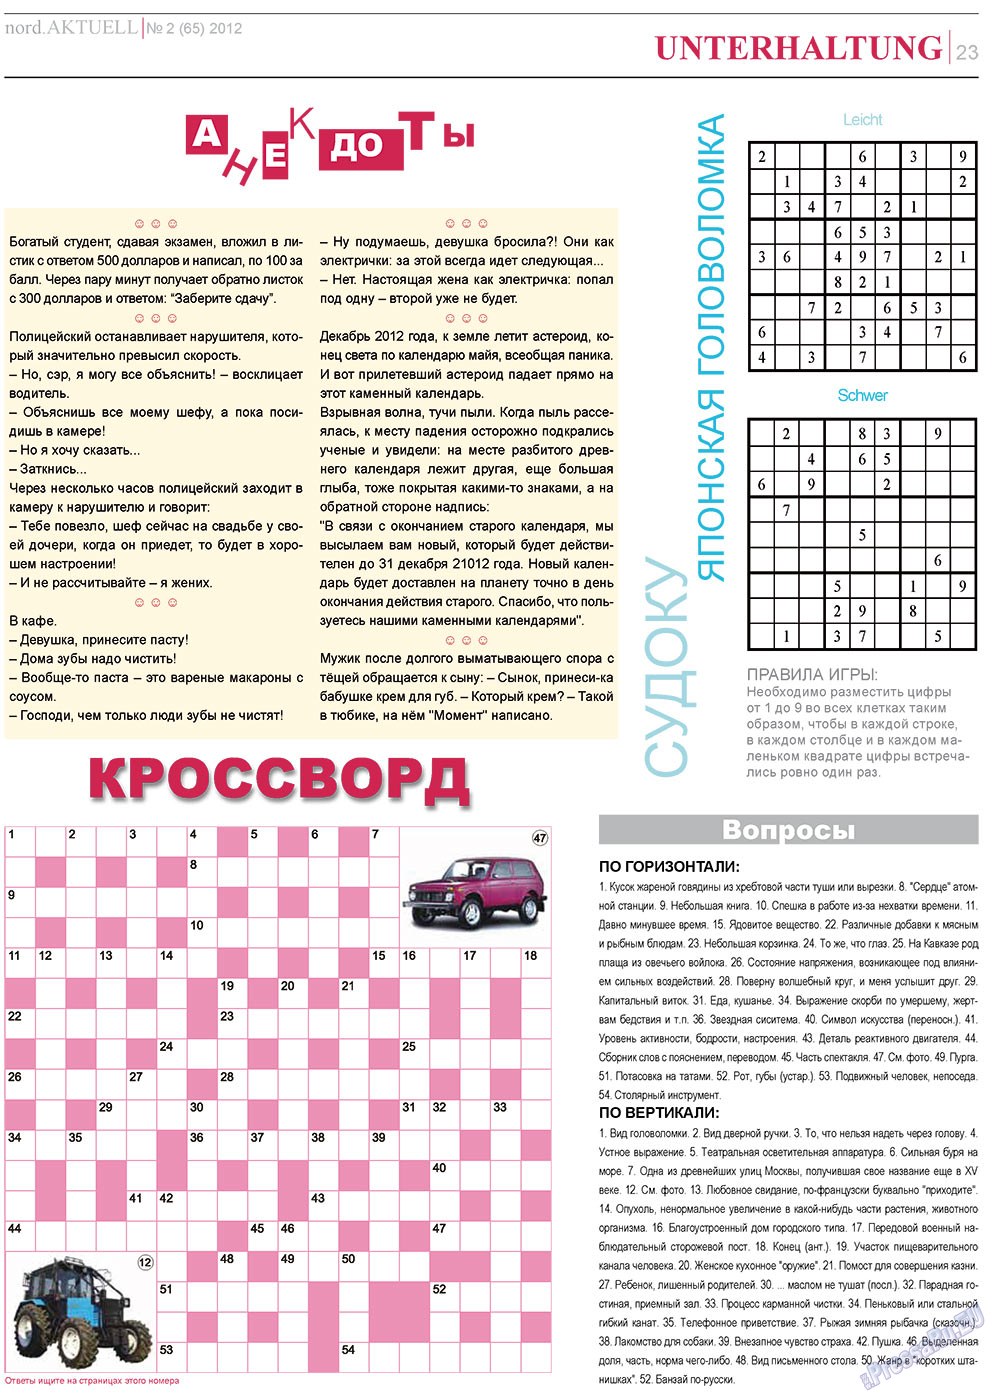 nord.Aktuell, газета. 2012 №2 стр.23